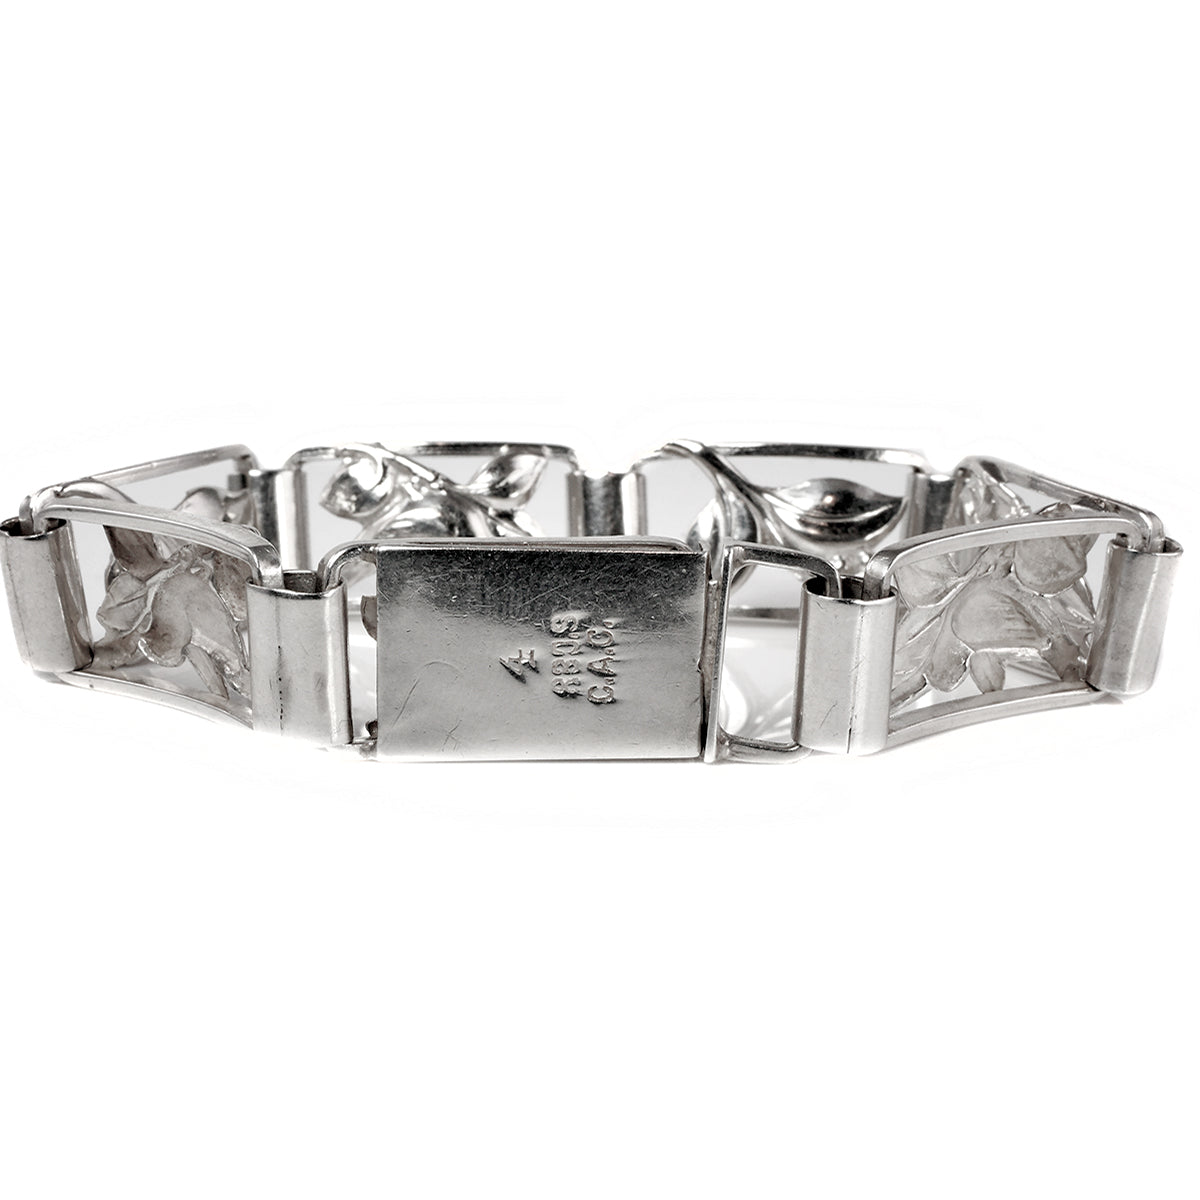 C A Christensen Silver Link Bracelet